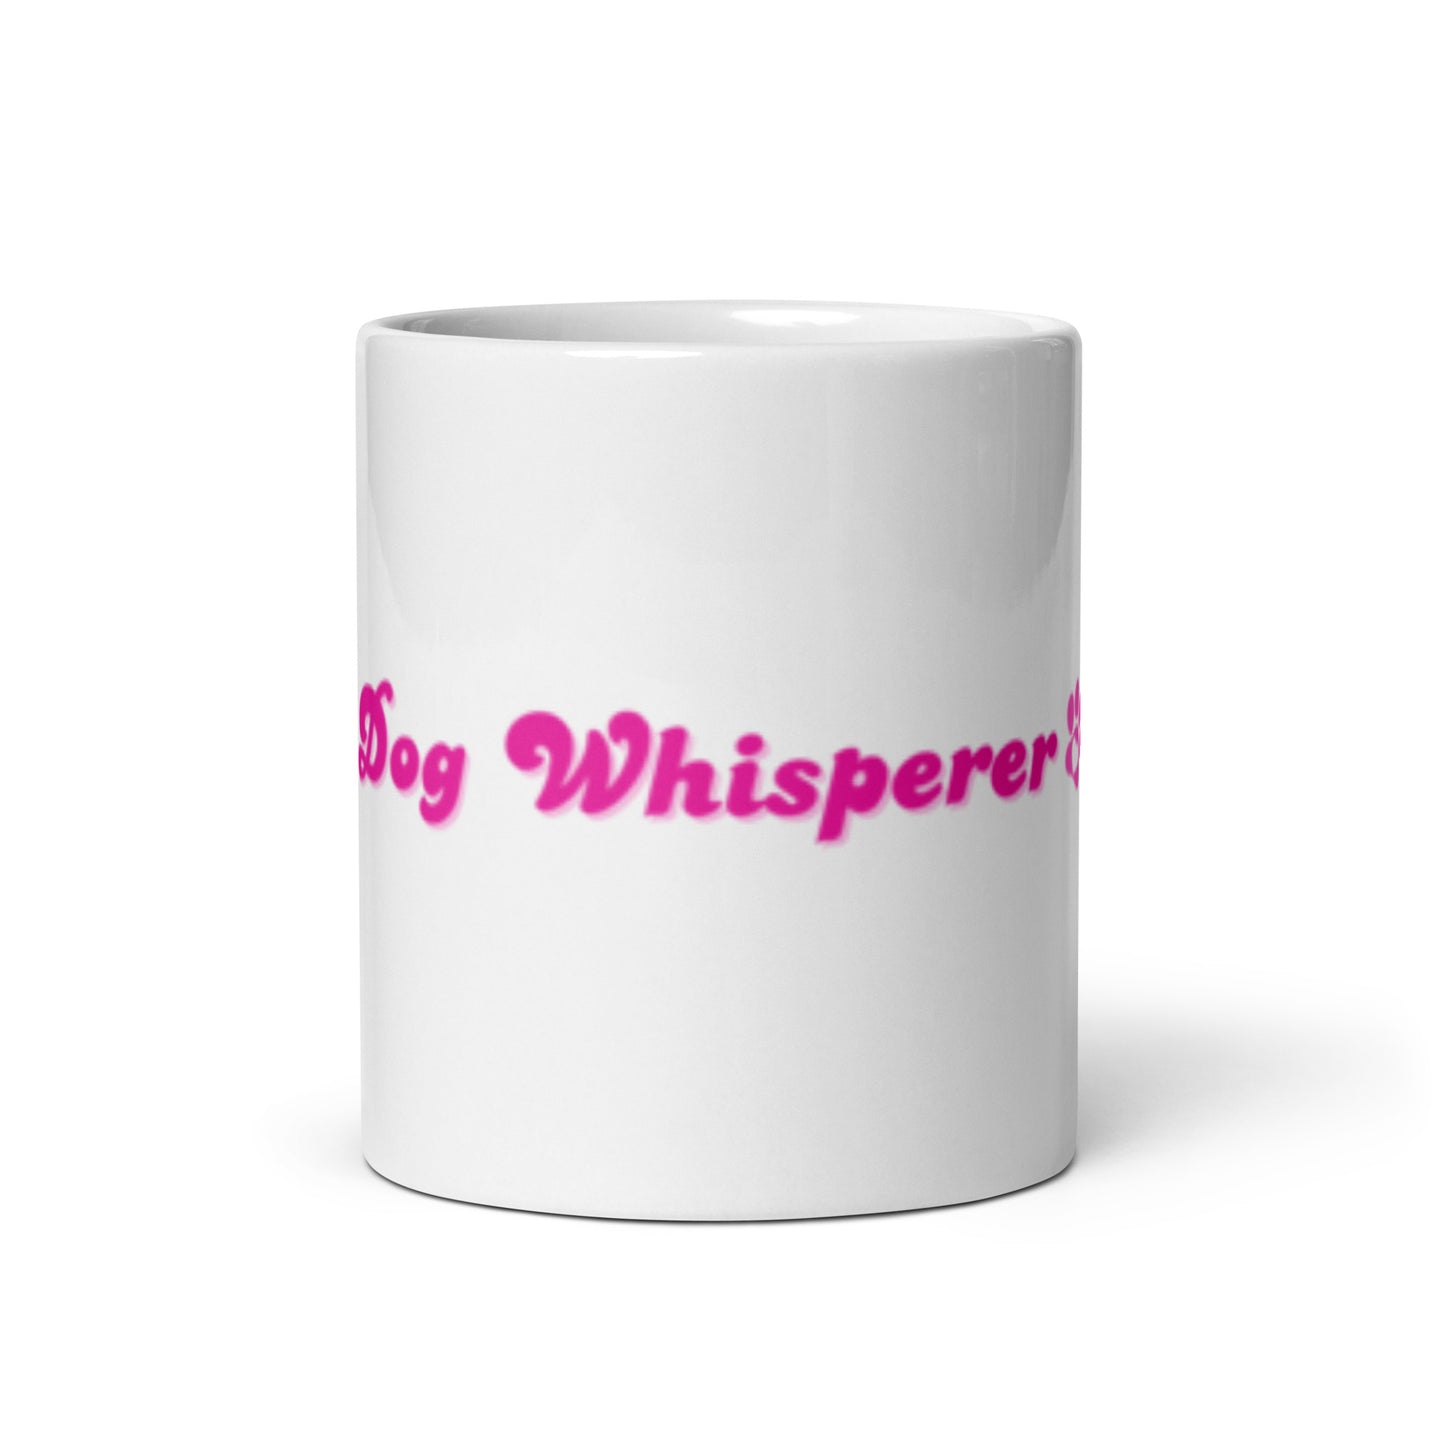 Dog Whisperer White glossy mug